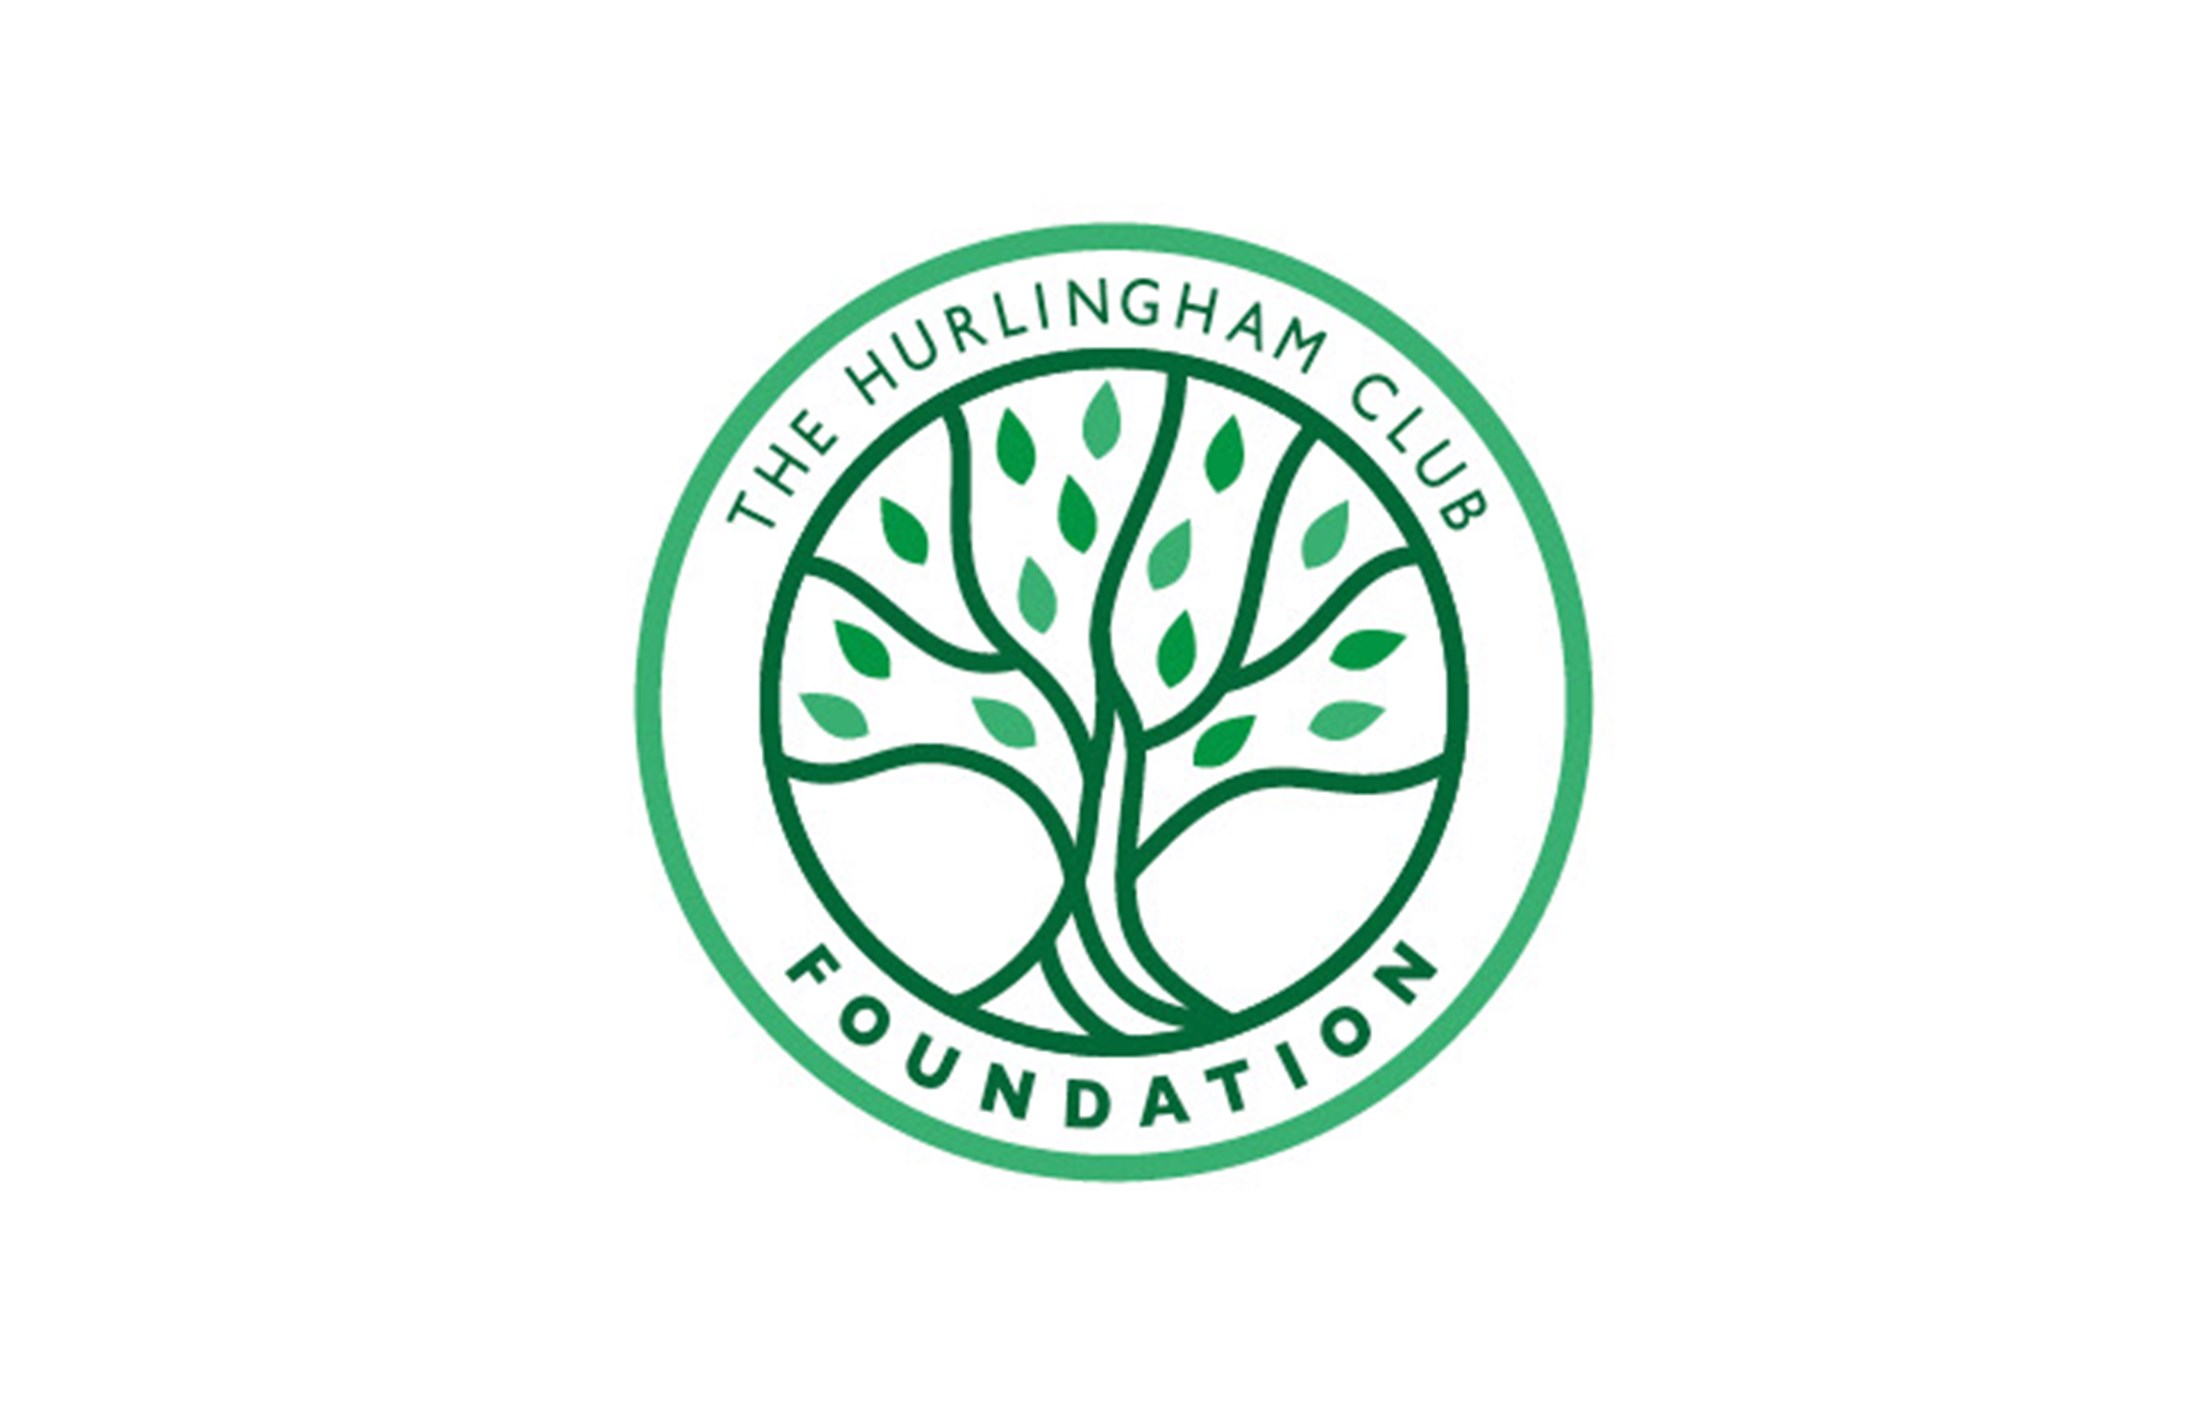 THE HURLINGHAM CLUB FOUNDATION